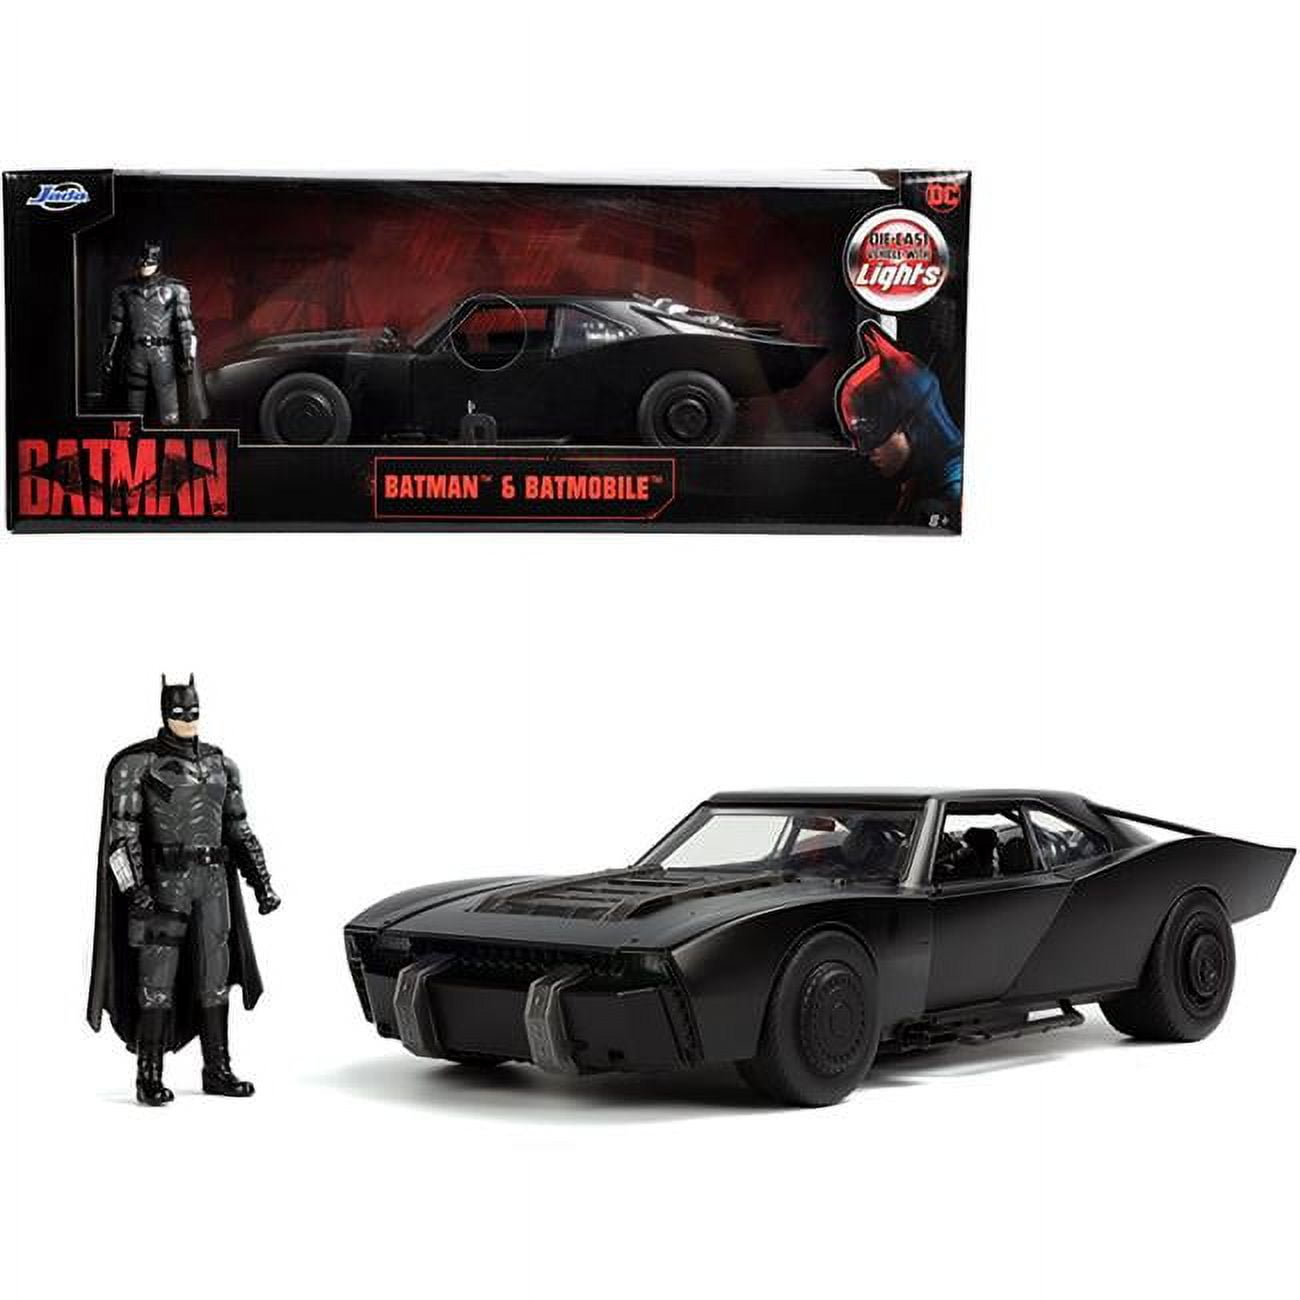 Endless Games 1-18 Scale Batmobile Matt Black with Lights with Batman Diecast Figurine The Batman Movie DC Comics Model Car